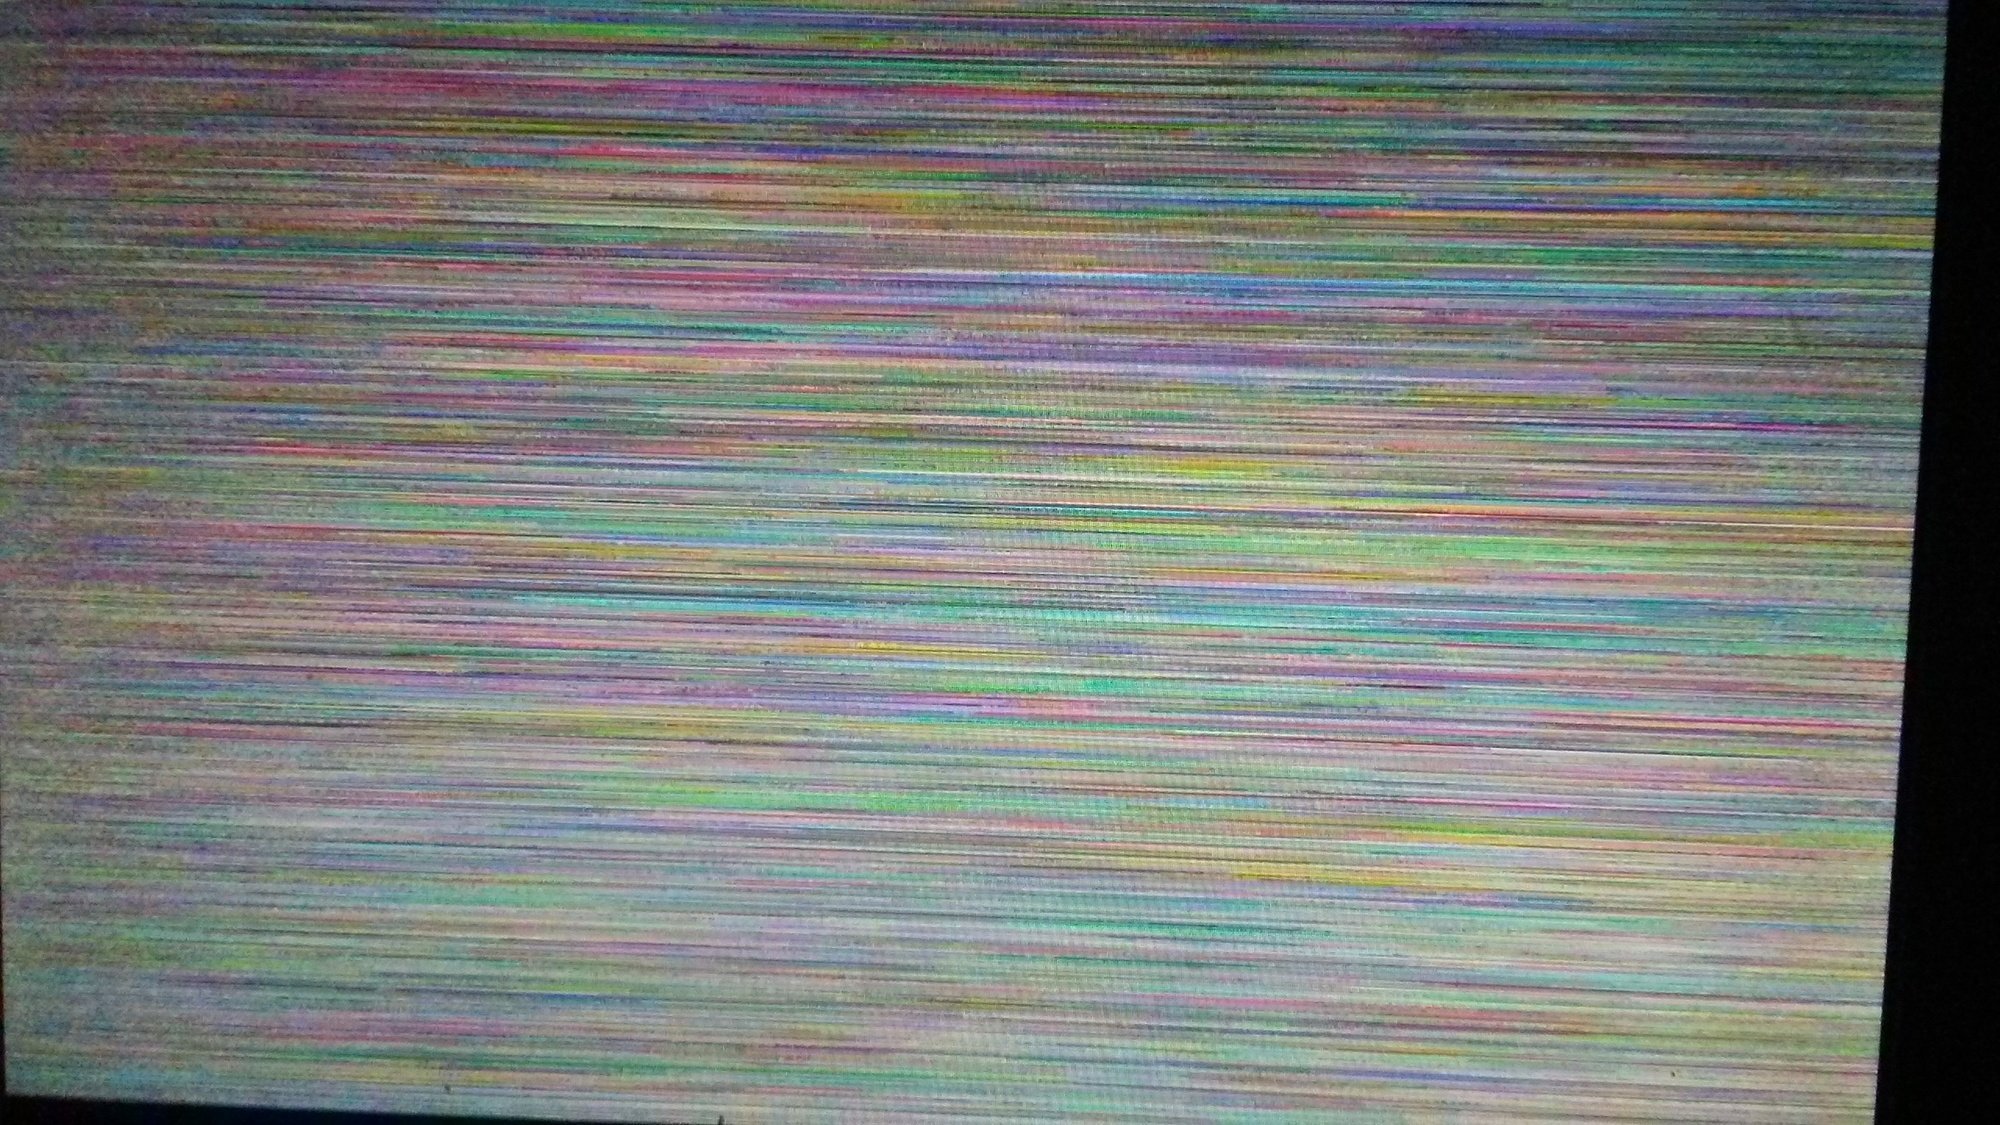 Windows 10 Computer Crashed a6e2b91a-e495-4ced-babf-a57dd58a126d?upload=true.jpg